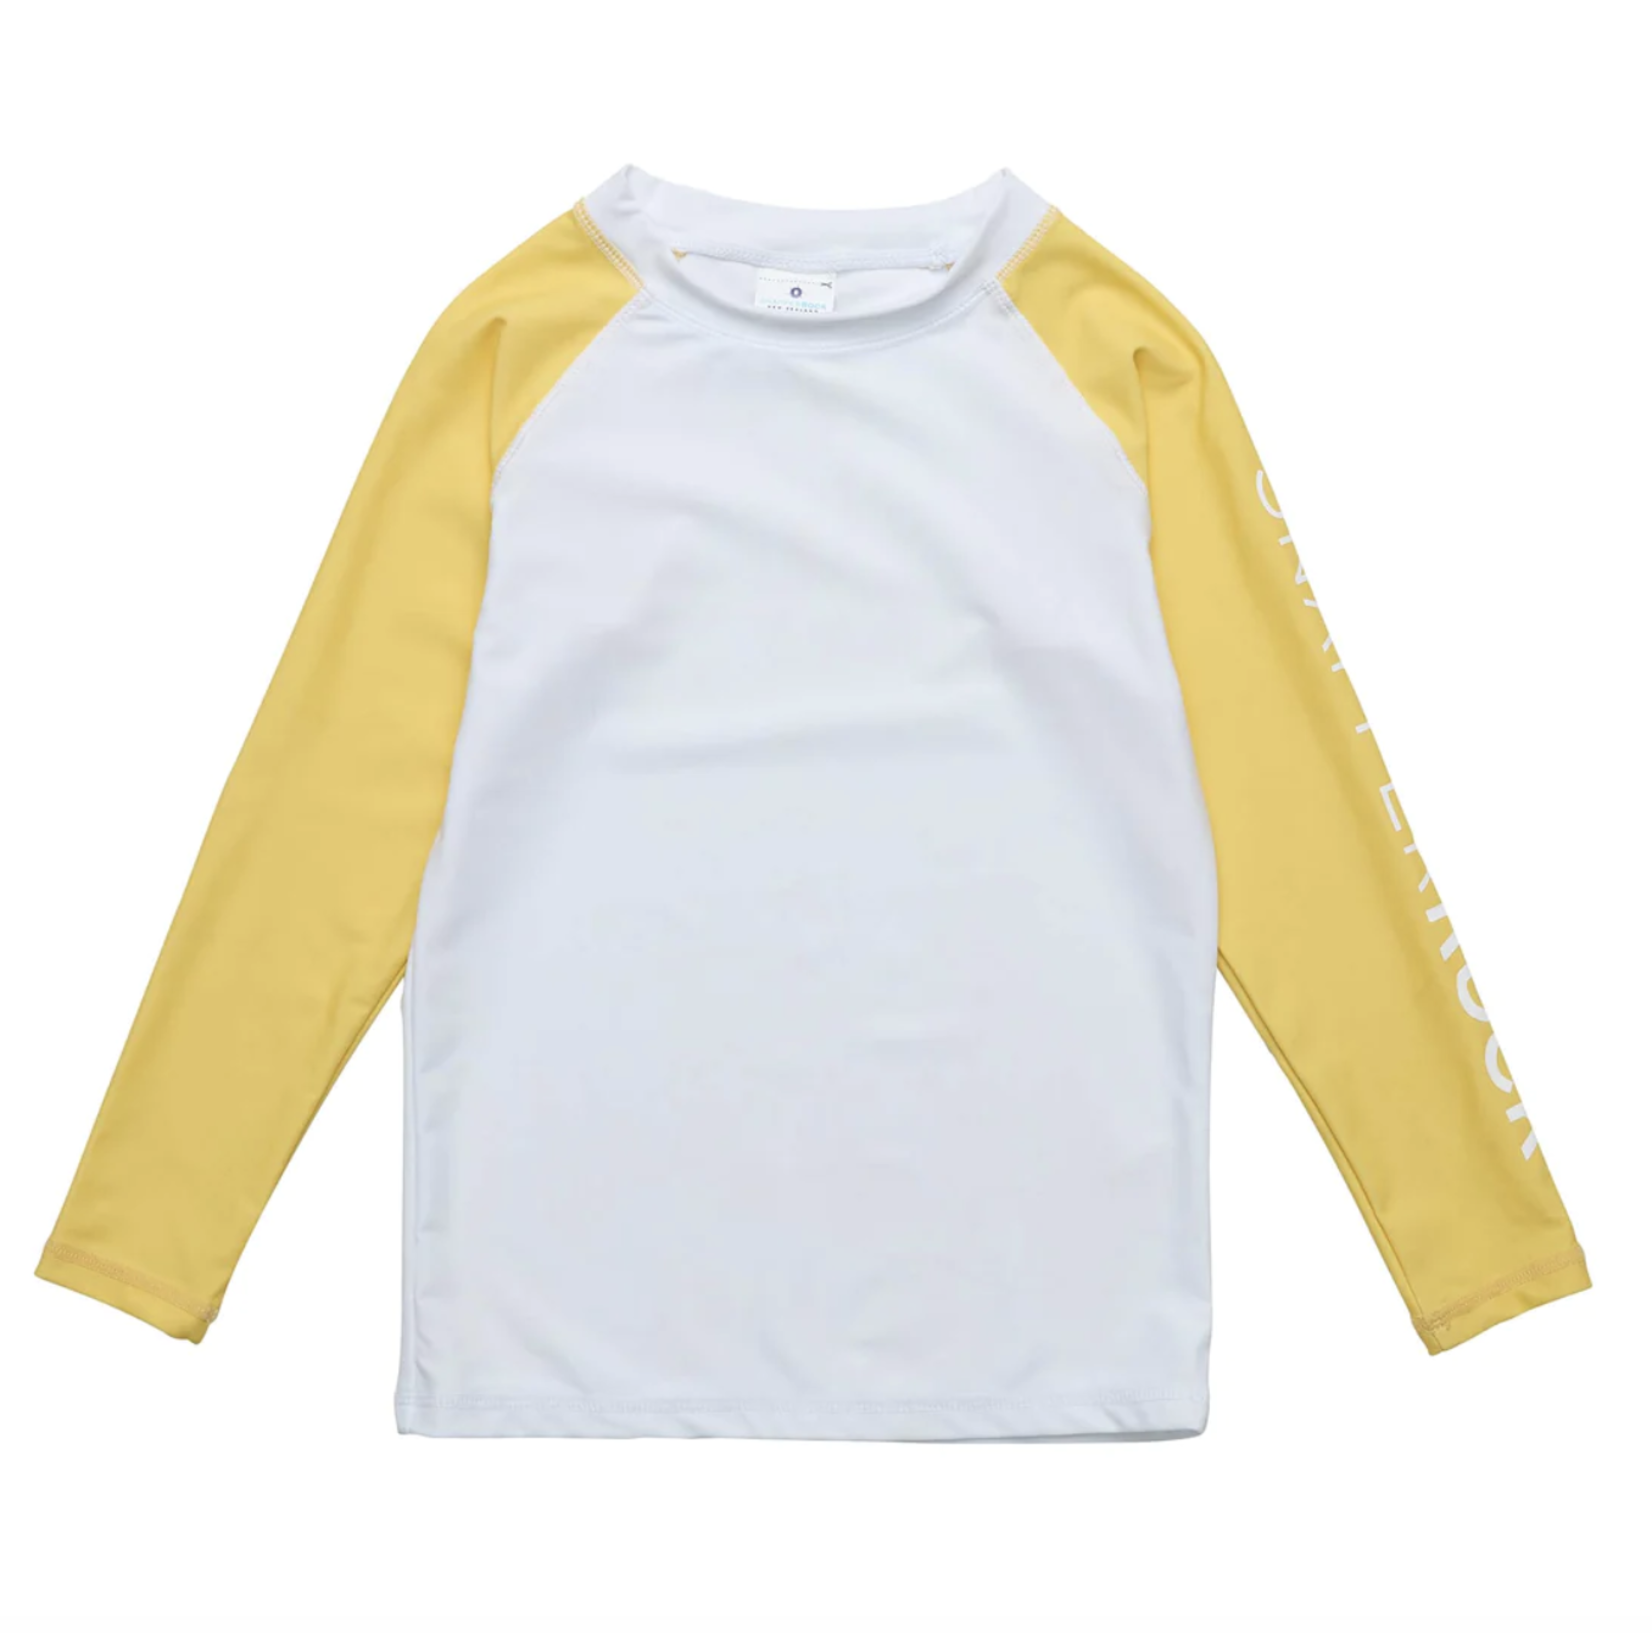 SNAPPERROCK White & Yellow Sustainable Longsleeve Rashguard